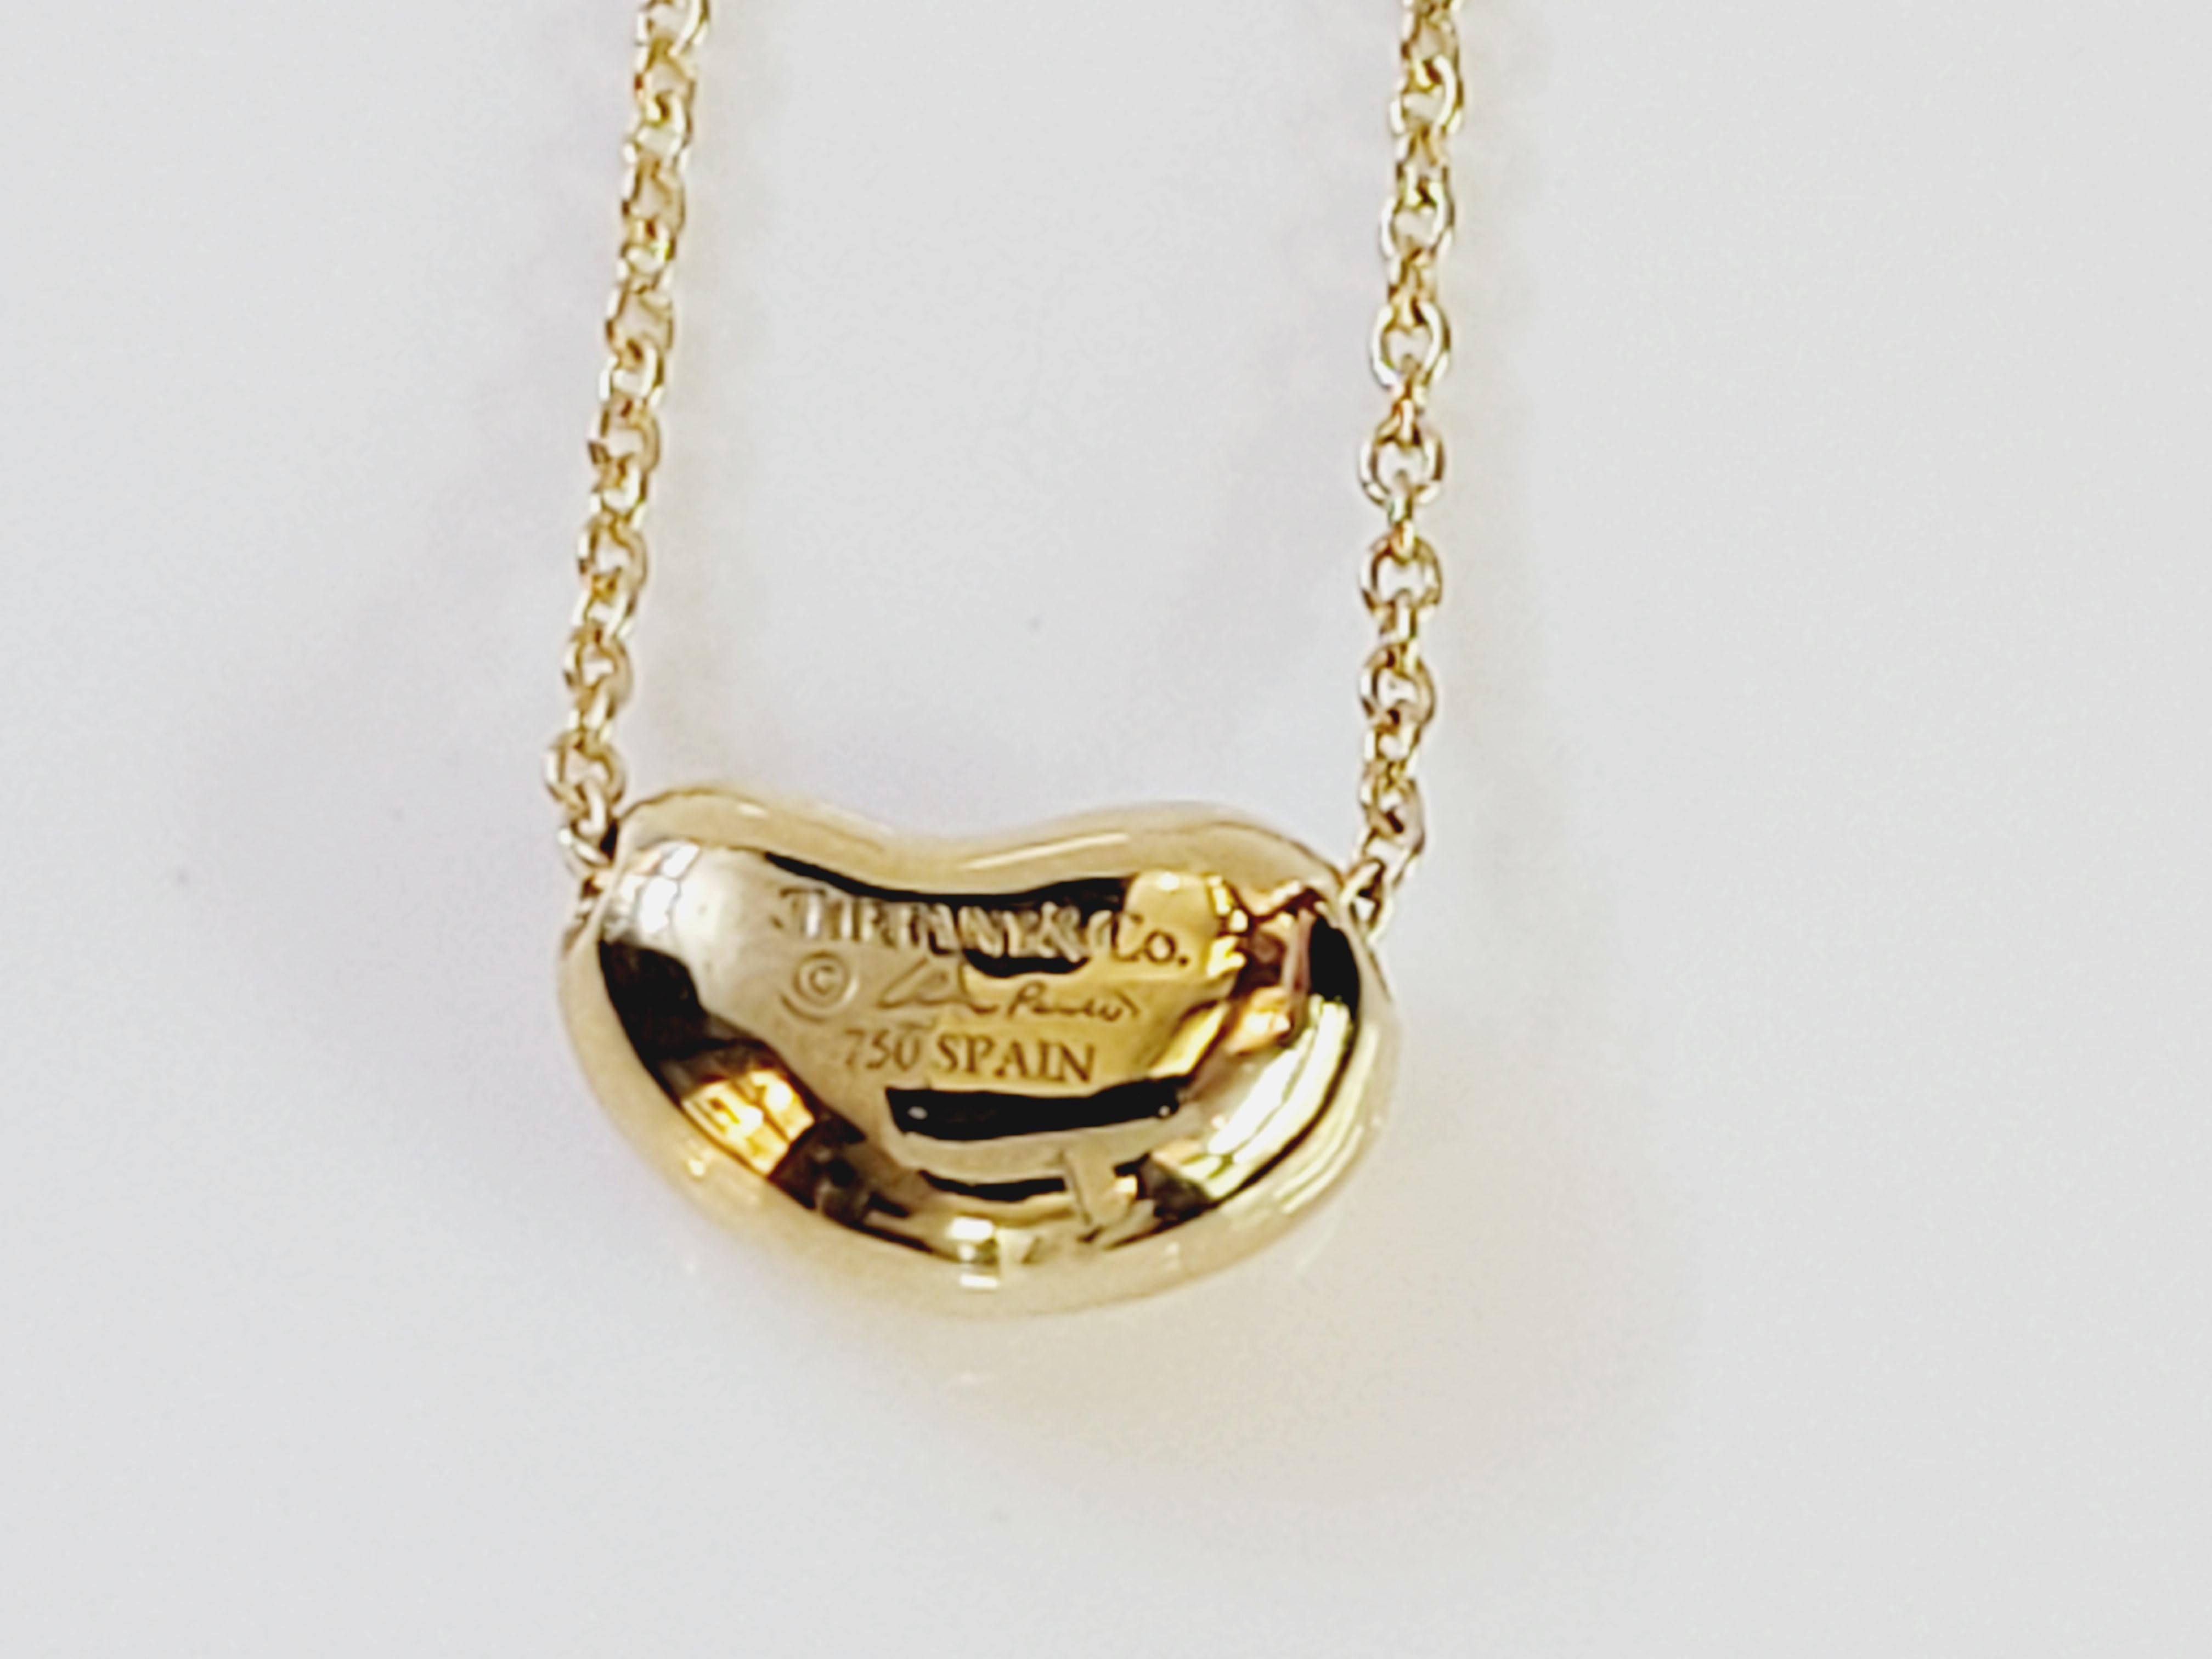 Brand: Tiffany & Co. Elsa Peretti

Mint condition

18k Yellow gold

Bean length 7.5mm

width 12.3mm

Chain length 16